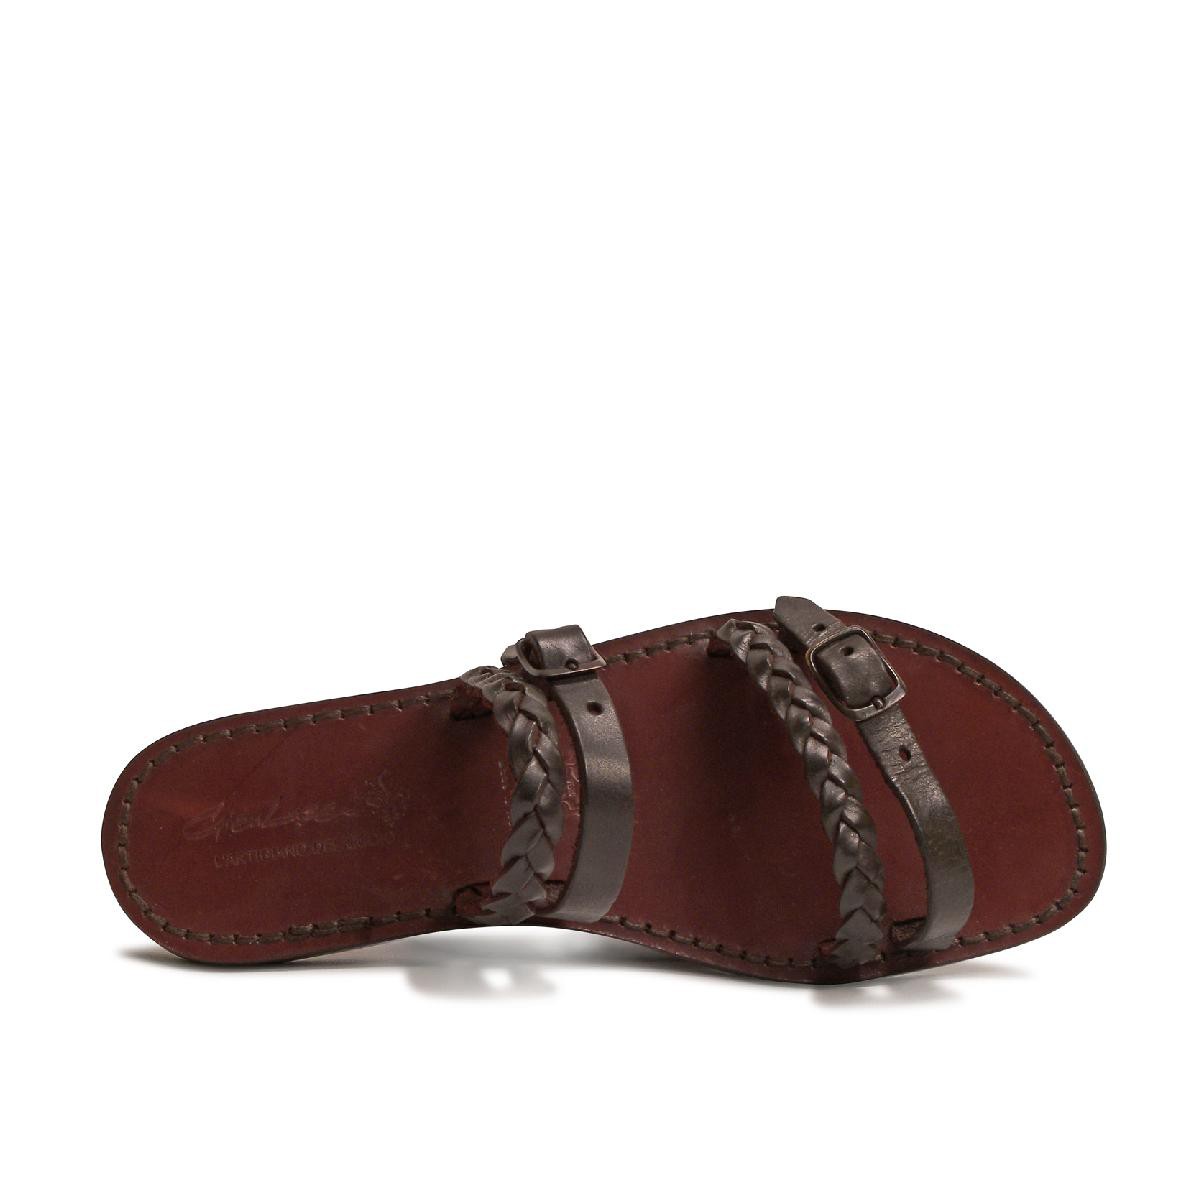 Handmade women s  slipper  sandals  dark brown leather 